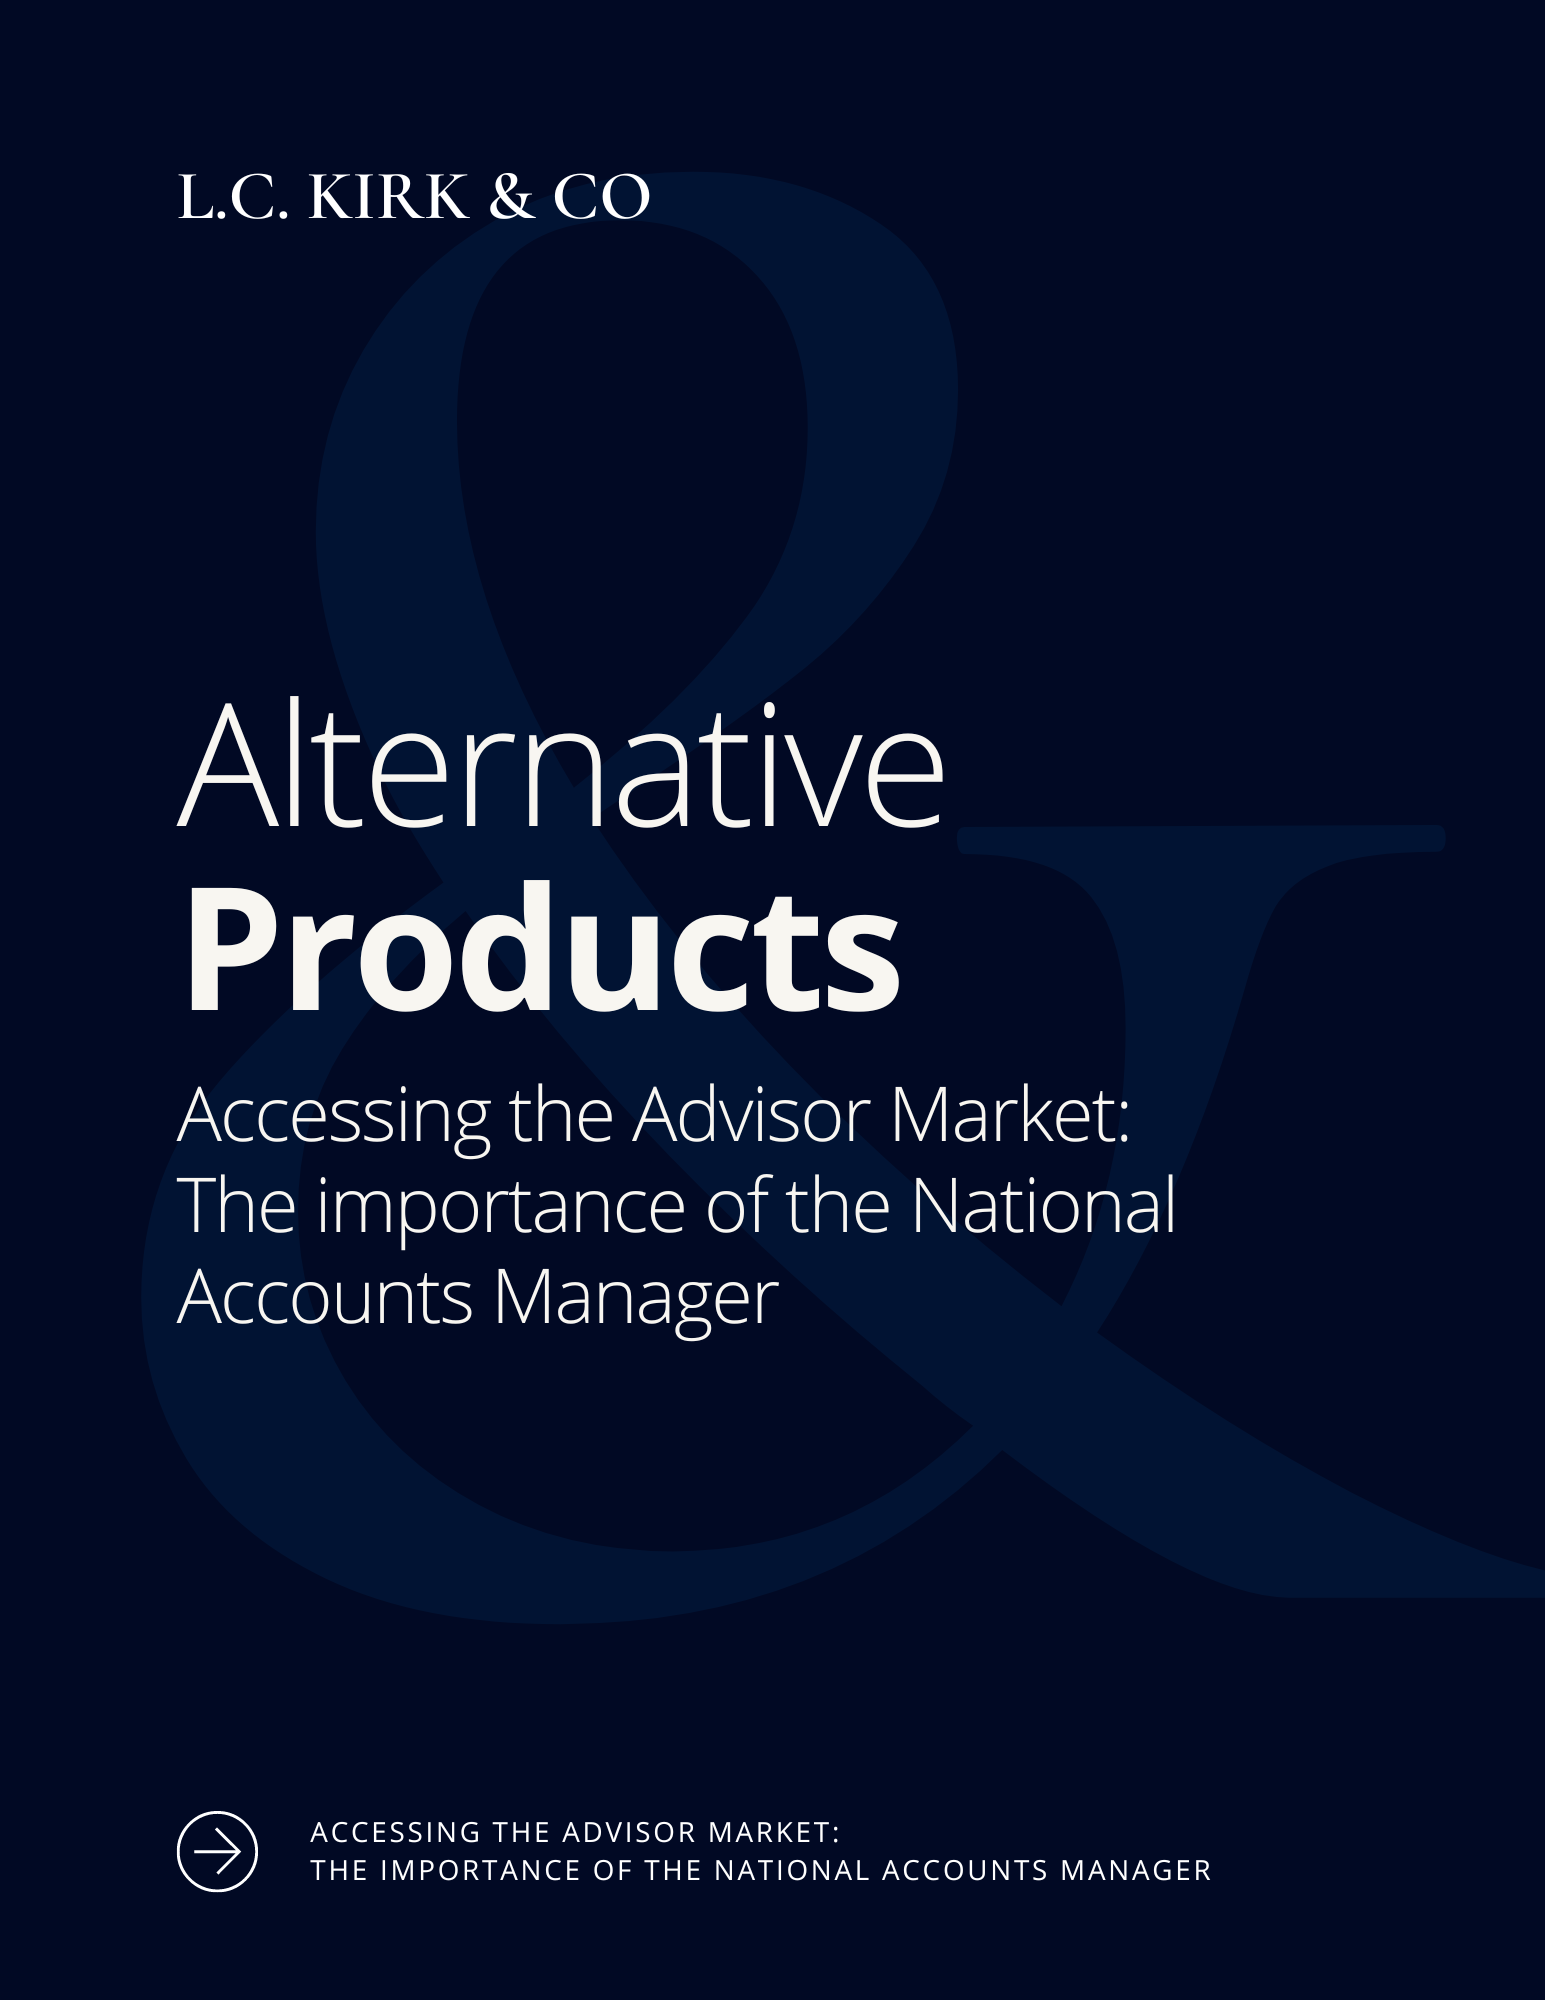 Alternative Products – L.C. KIRK & CO (4)